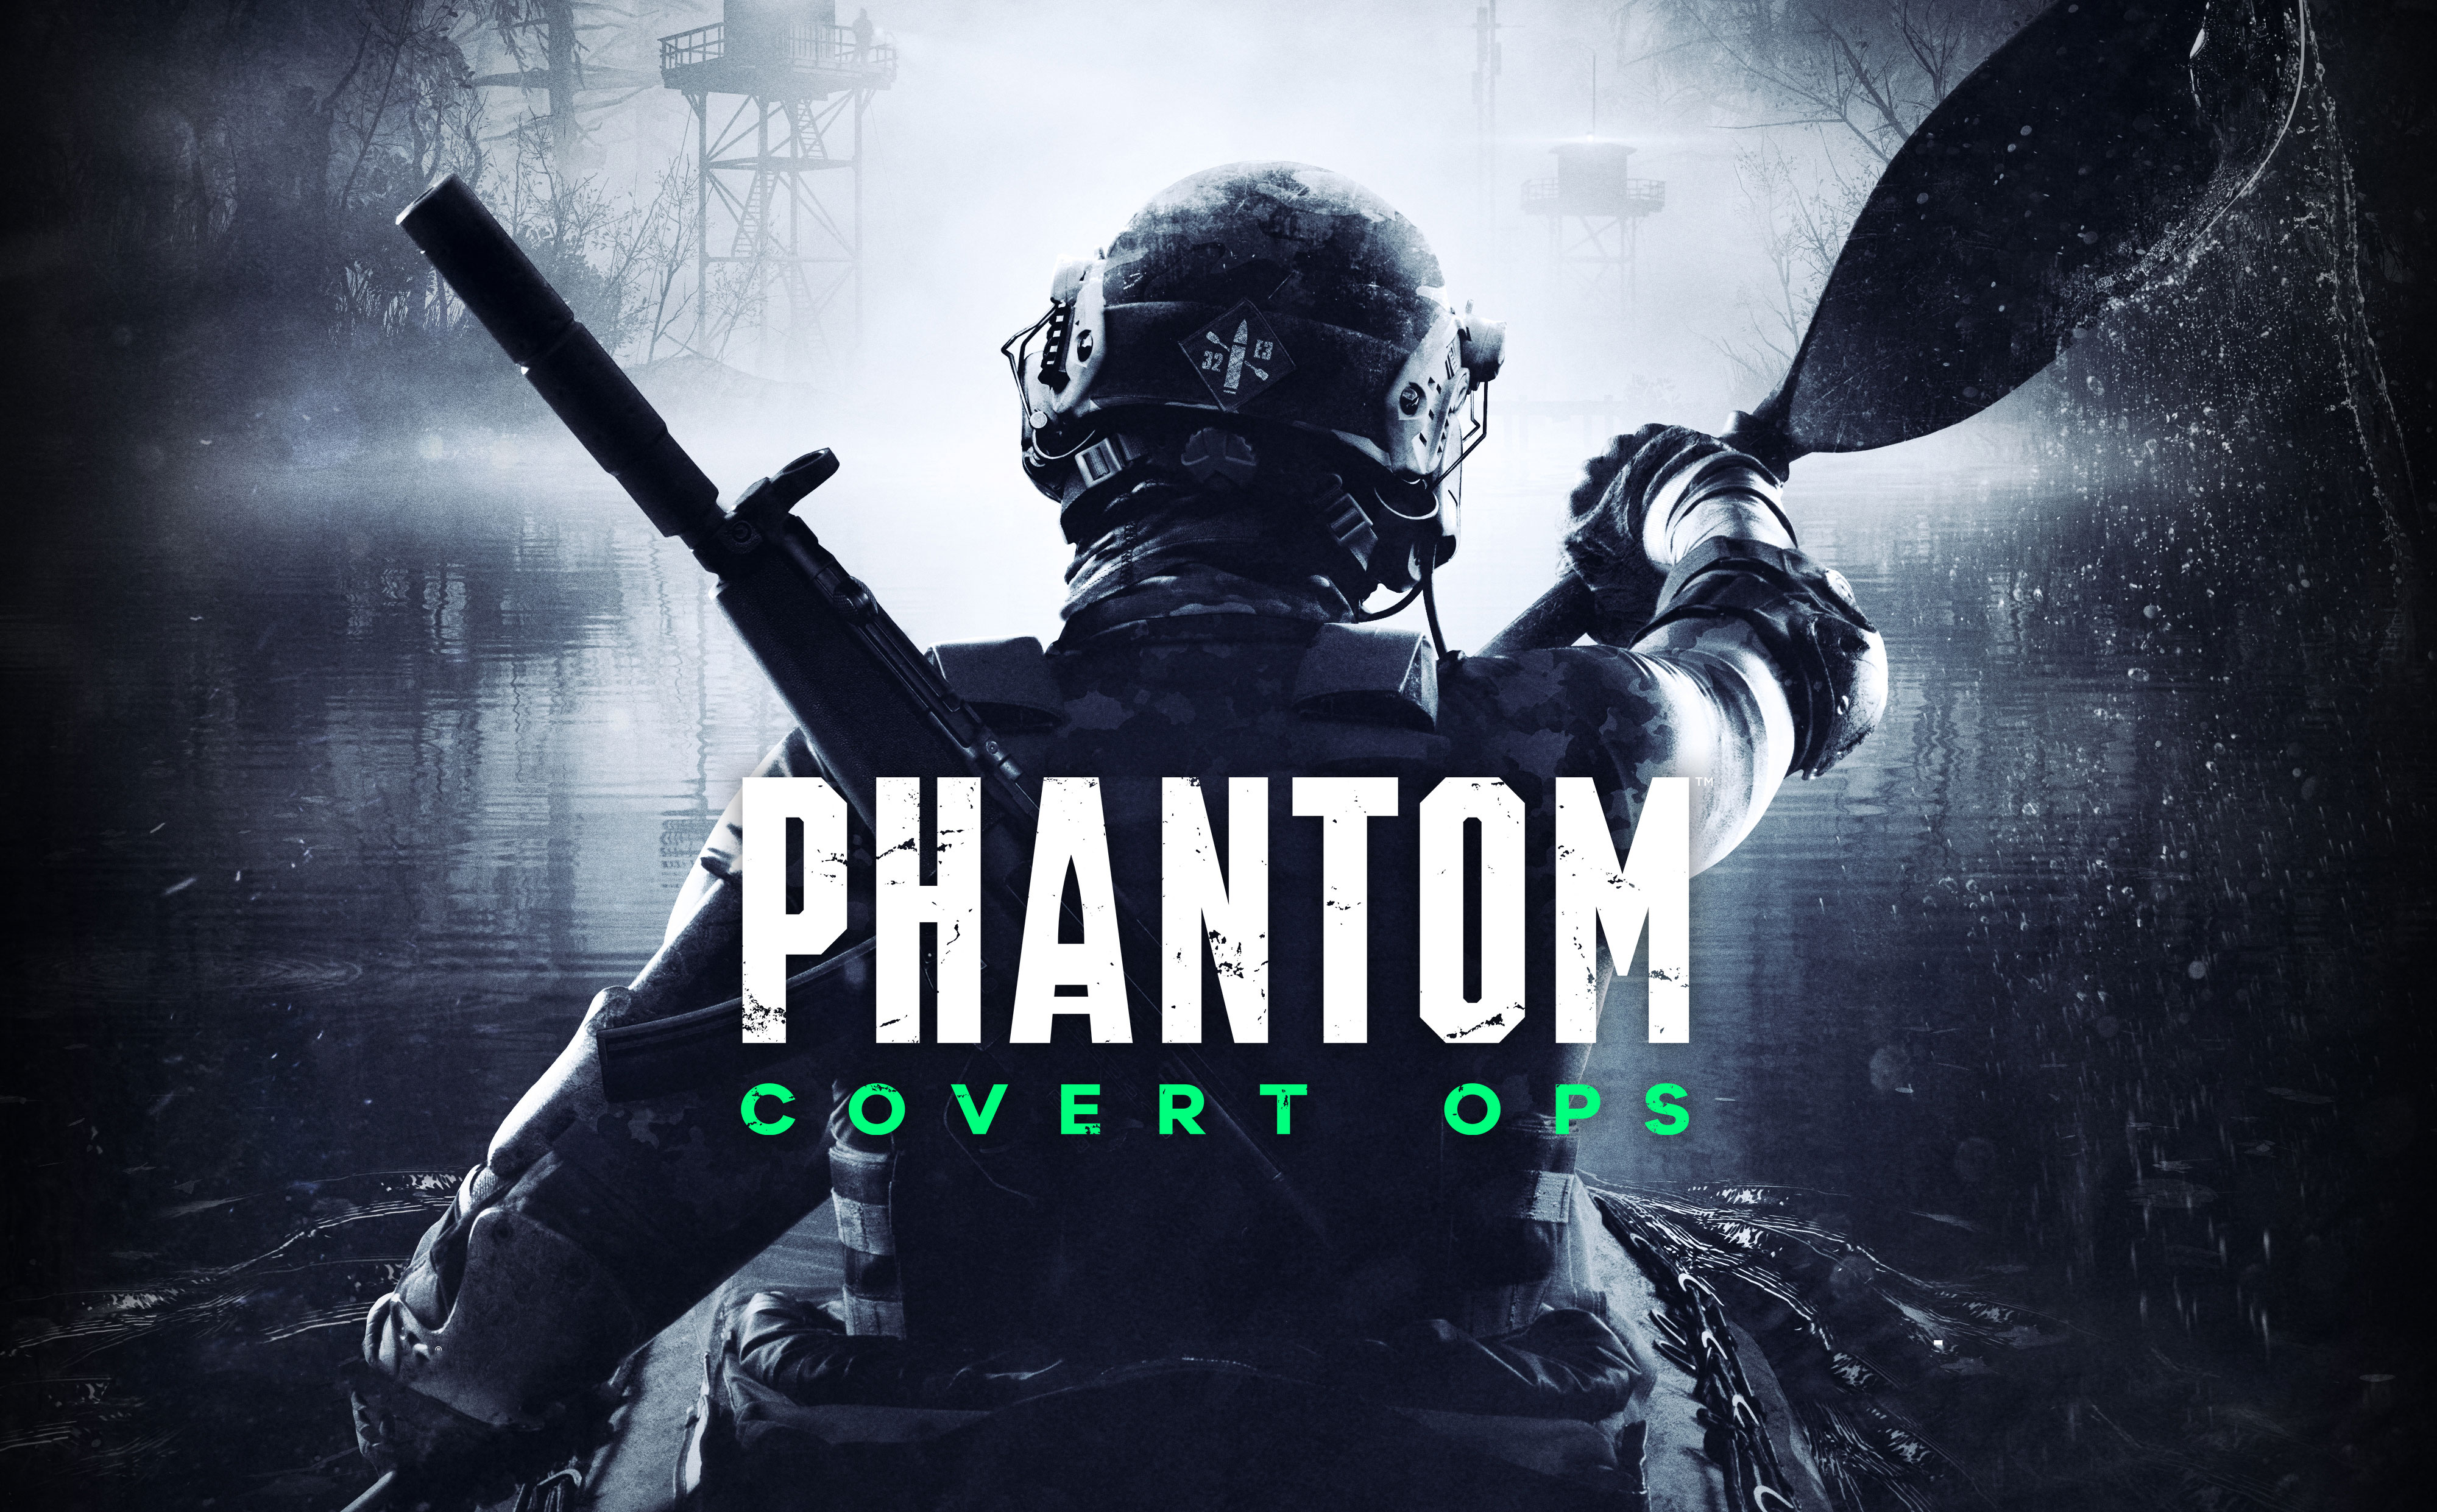 Wallpapers games 2019 games phantom covert ops on the desktop